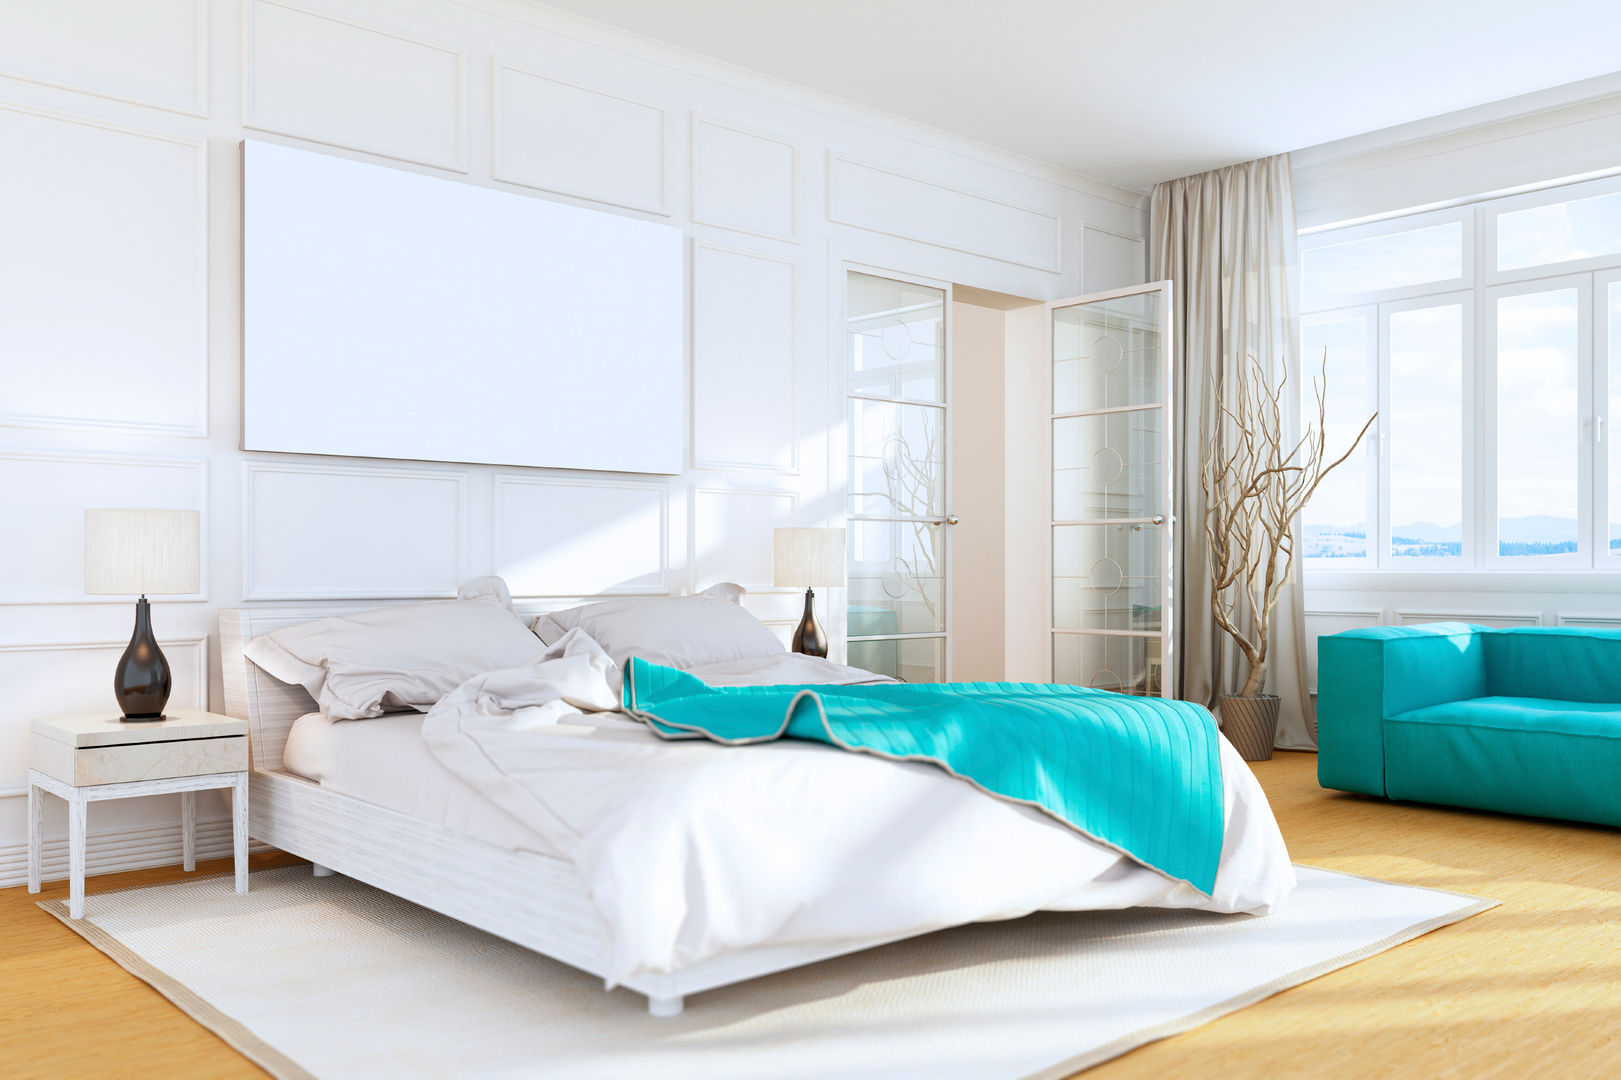 Beach House Bedroom Gracious Luxury Interiors Minimalistische slaapkamers Torquoise,Blue,beach house,White,Bright,Pastel,Minimal,Pop of Color